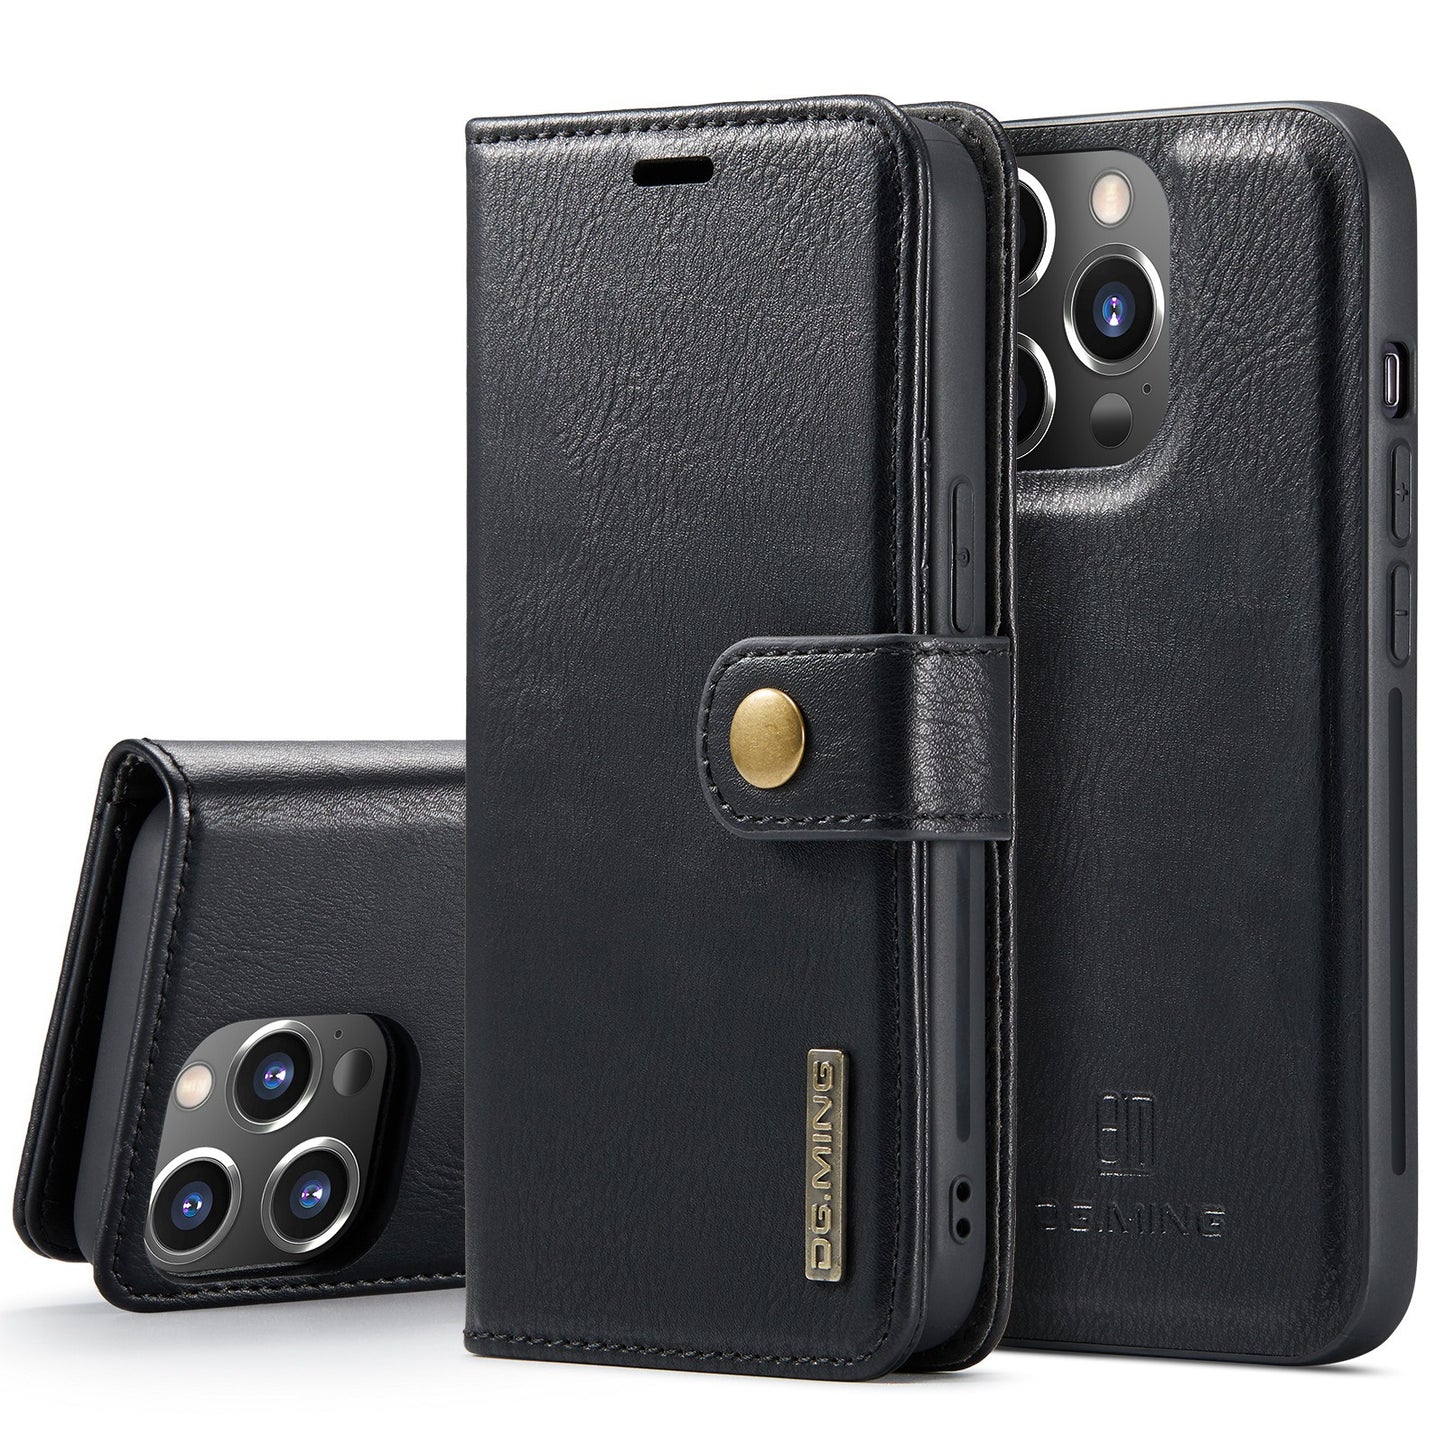 Apple iPhone 6 - 14 Pro Max Magnet Split Phone Leather Case